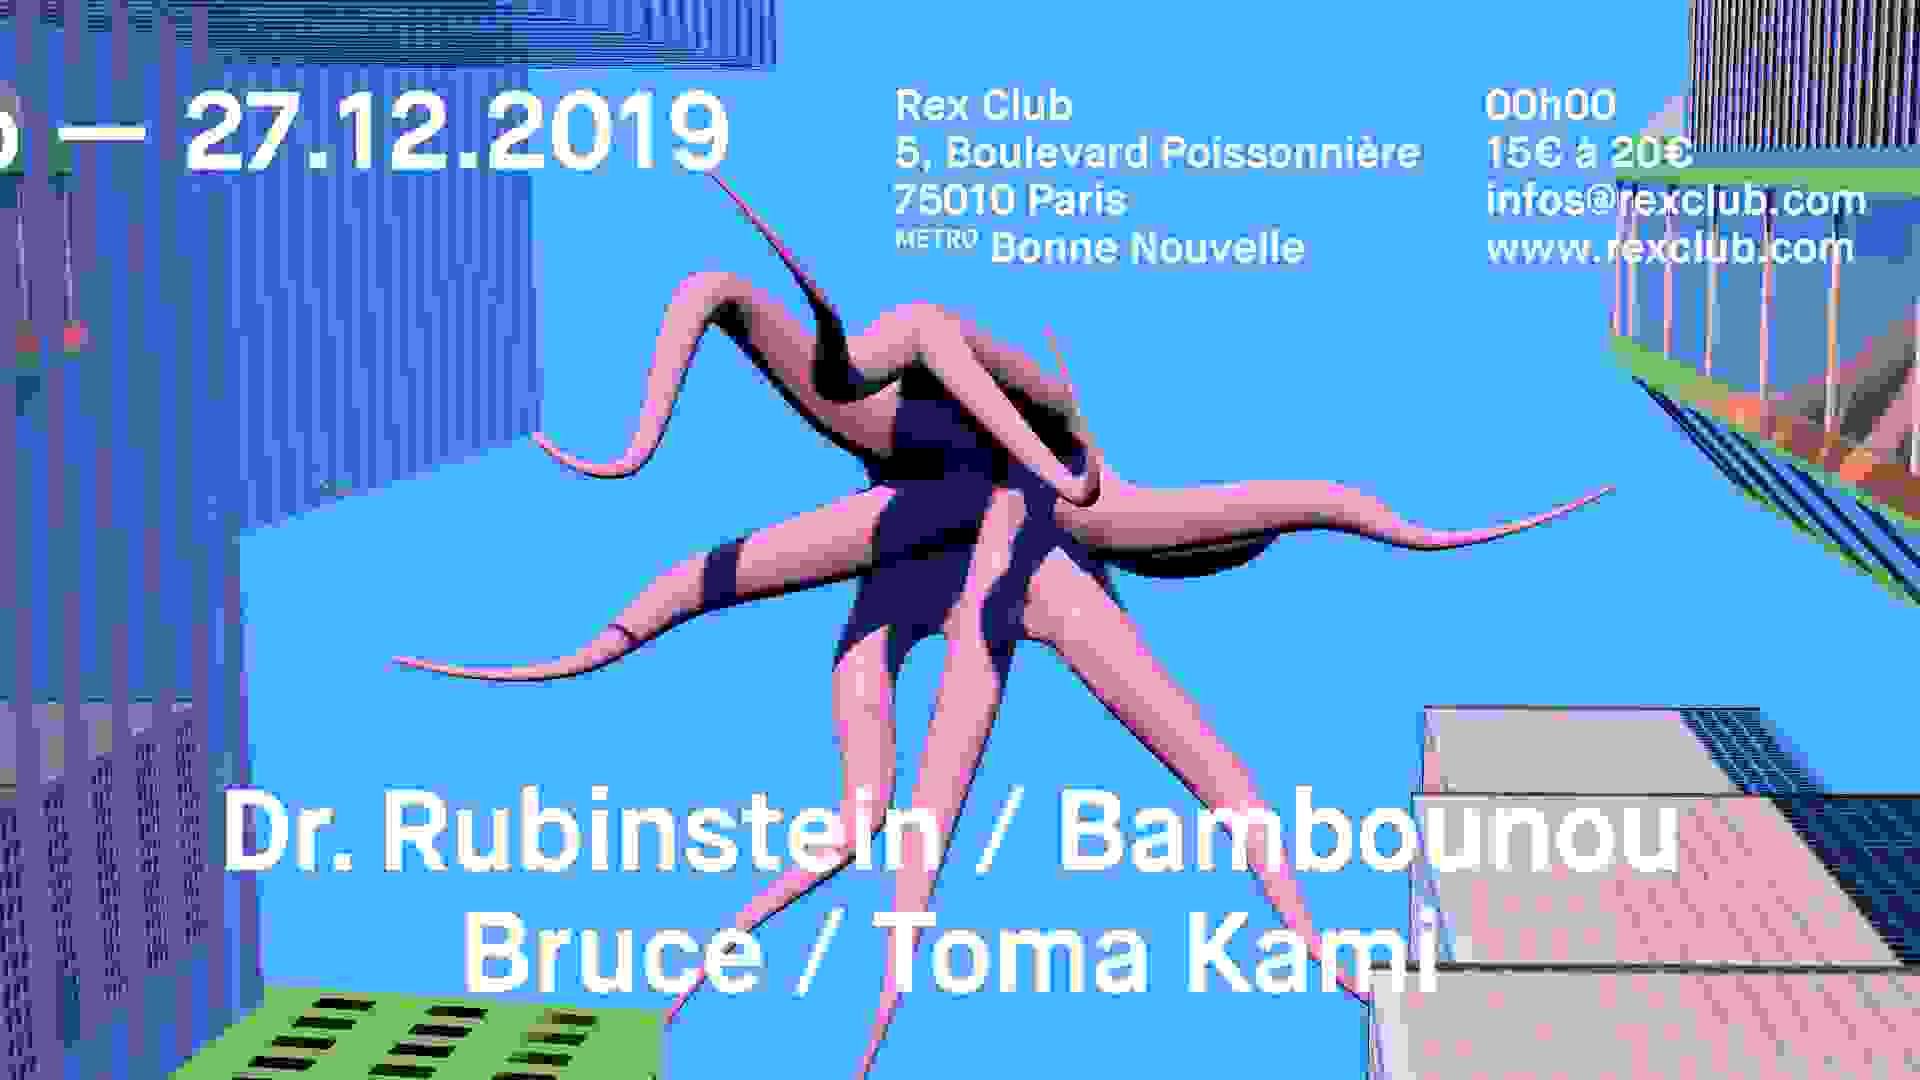 Rex Club presente: Dr. Rubinstein, Bambounou, Bruce, Toma Kami